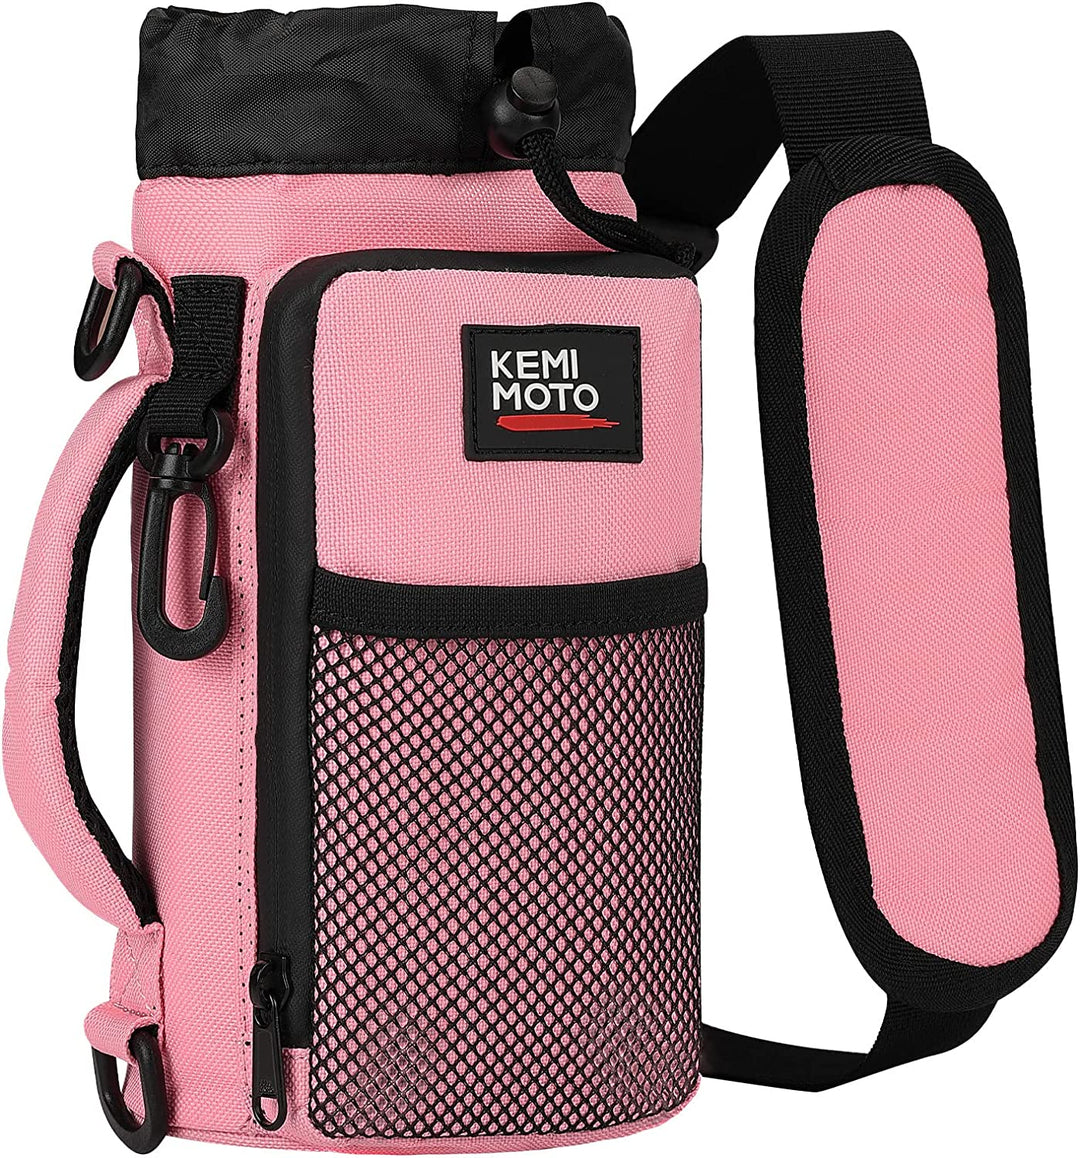 KEMIMOTO Water Bottle Holder Bag, Water Bottle Carrier with Adjustable  Shoulder Strap, Water Bottle Pouch Holder for Hiking, Camping, Fishing